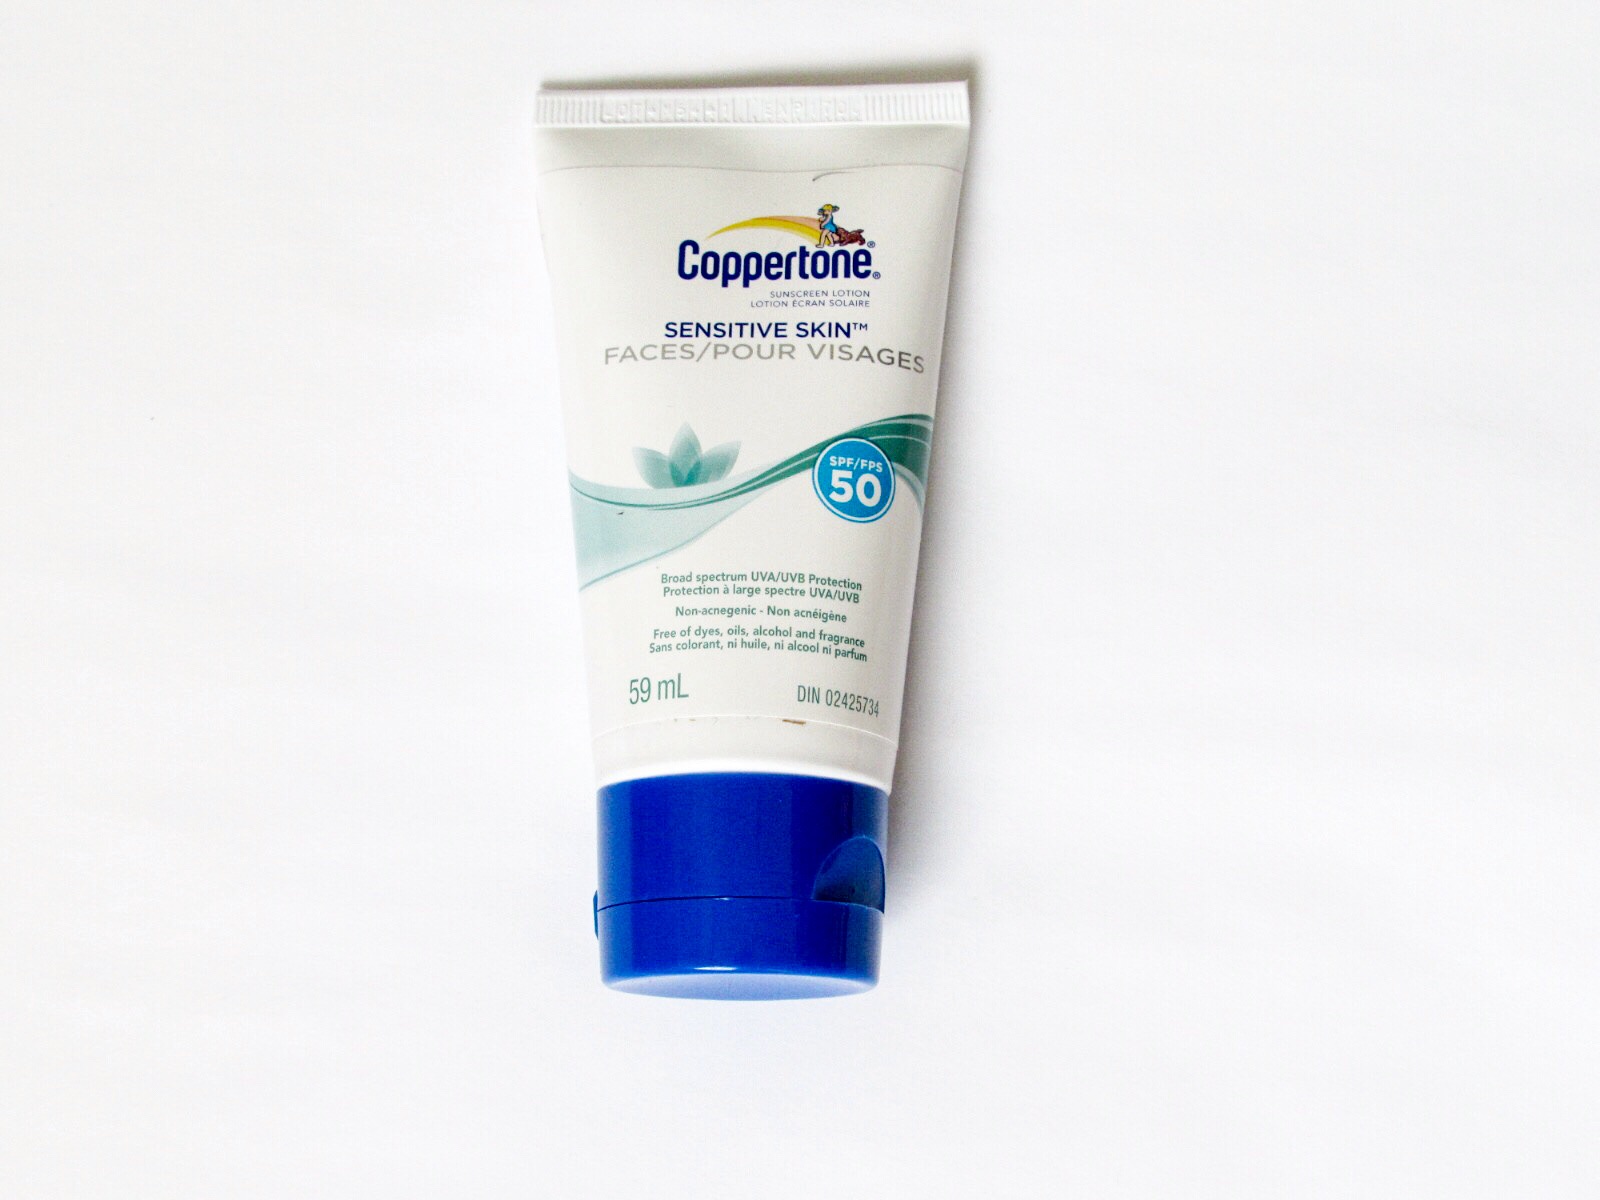 Review of Coppertone Sunscreen Lotion Sensitive Skin SPF 50 for Chick Advisor